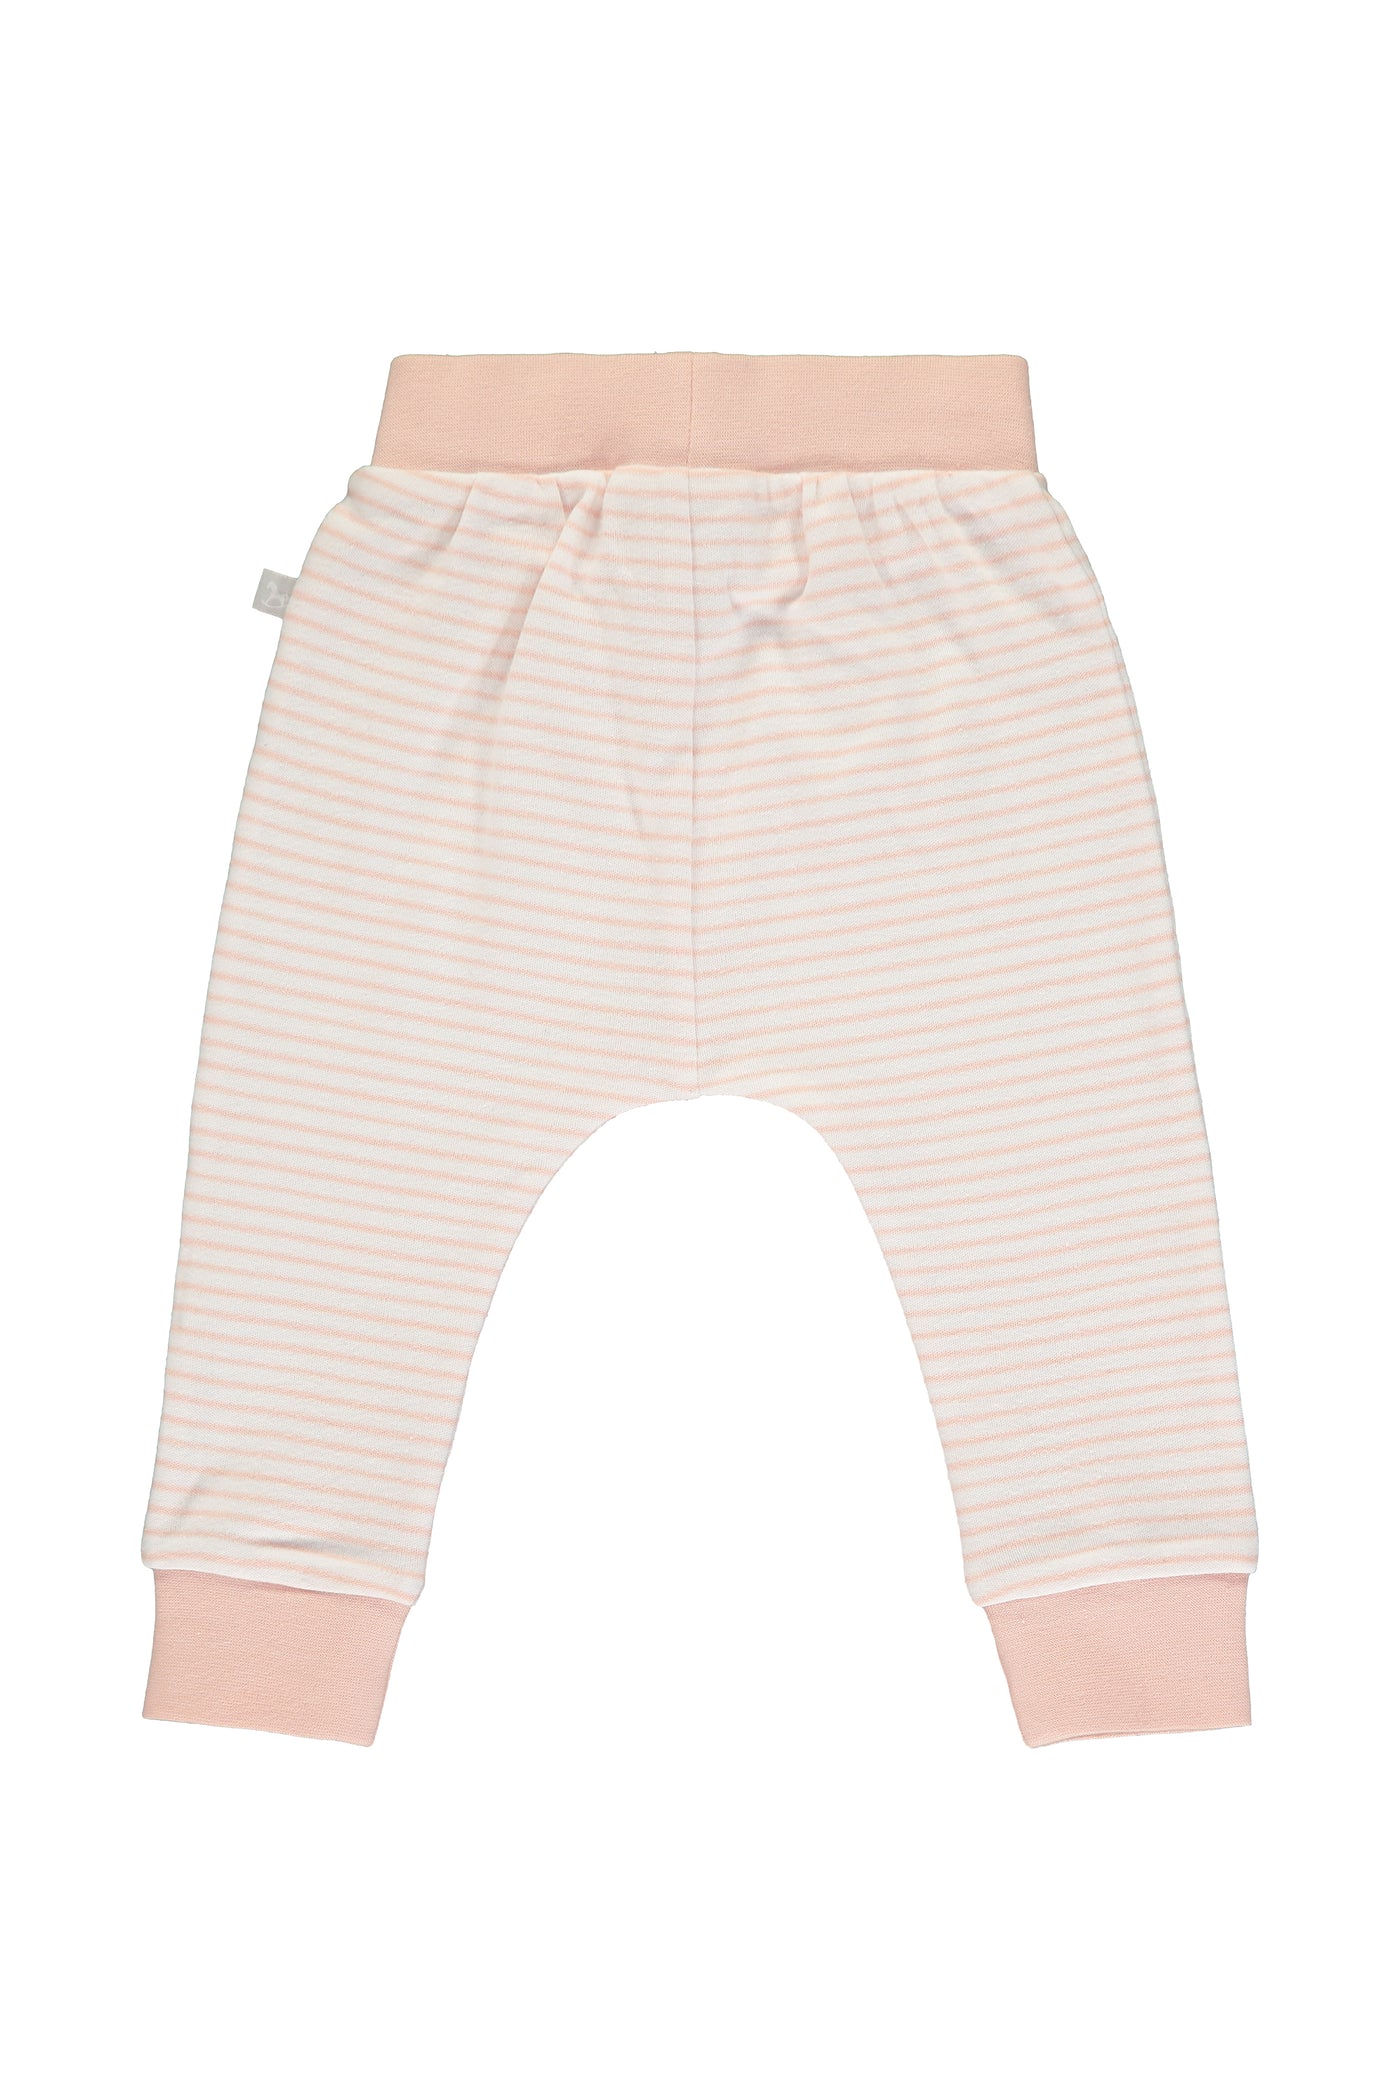 Comfy Stripey Print Pant - pink